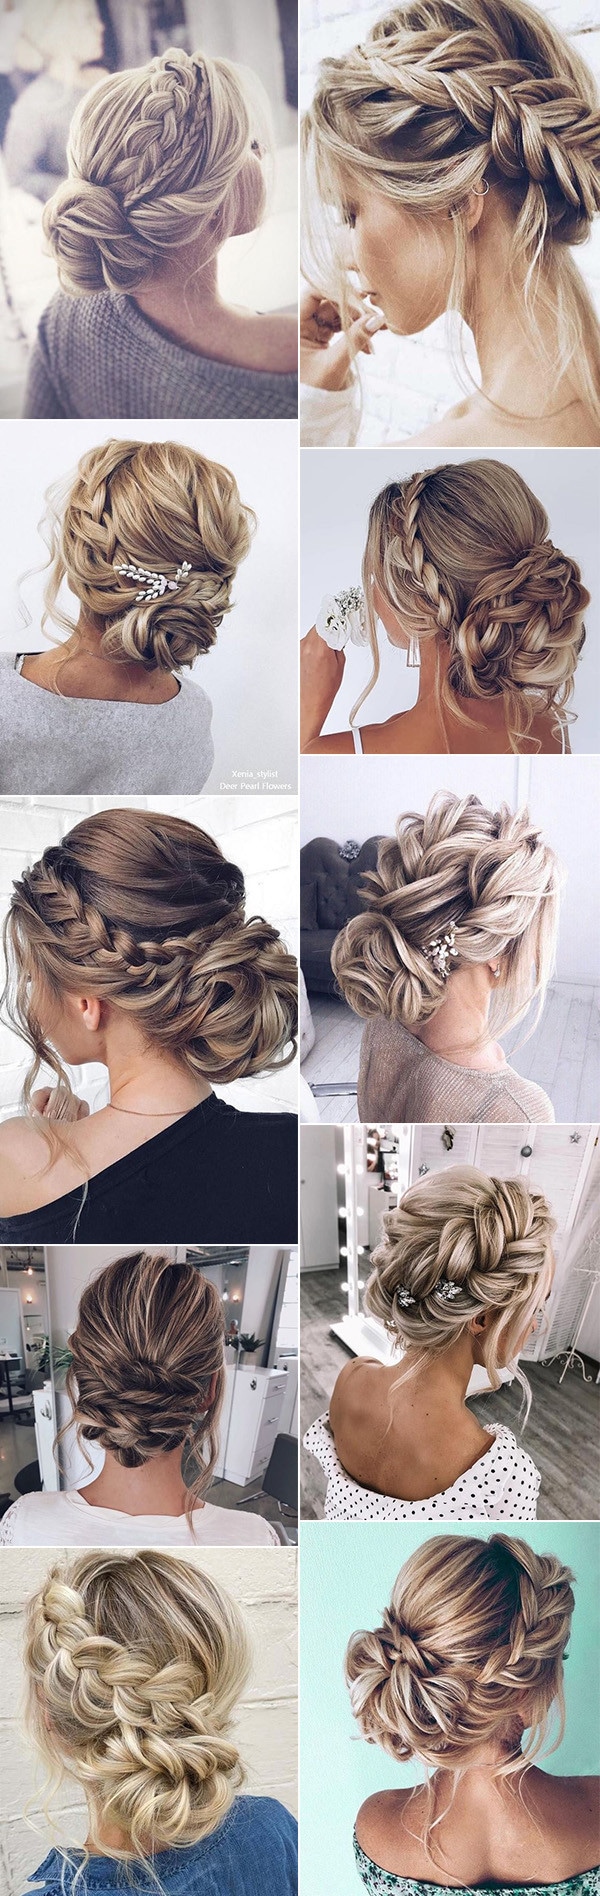 stunning braided updo wedding hairstyles